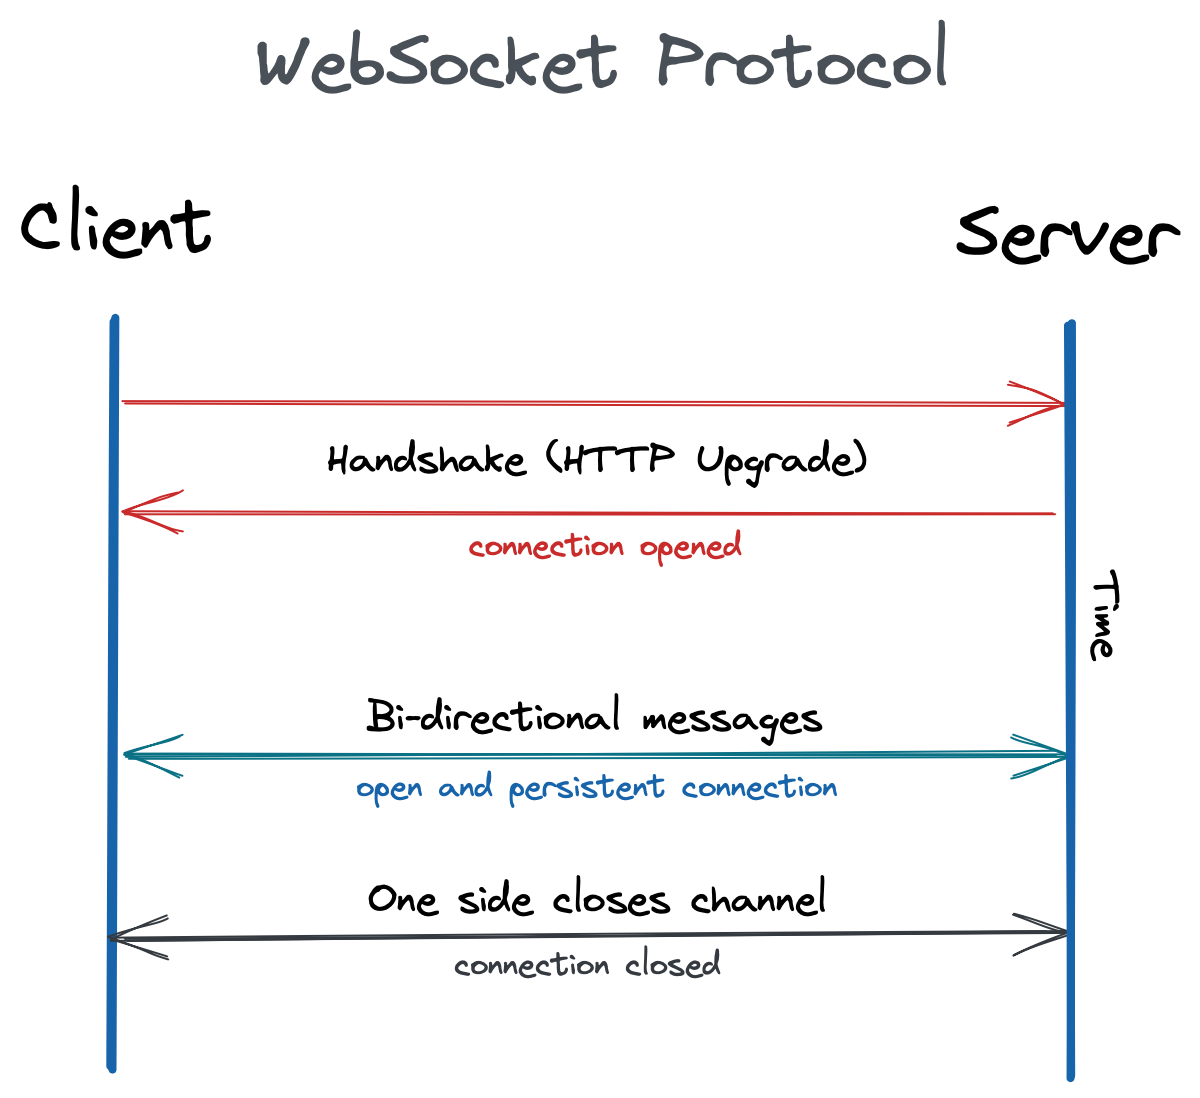 WebSocket Protocol